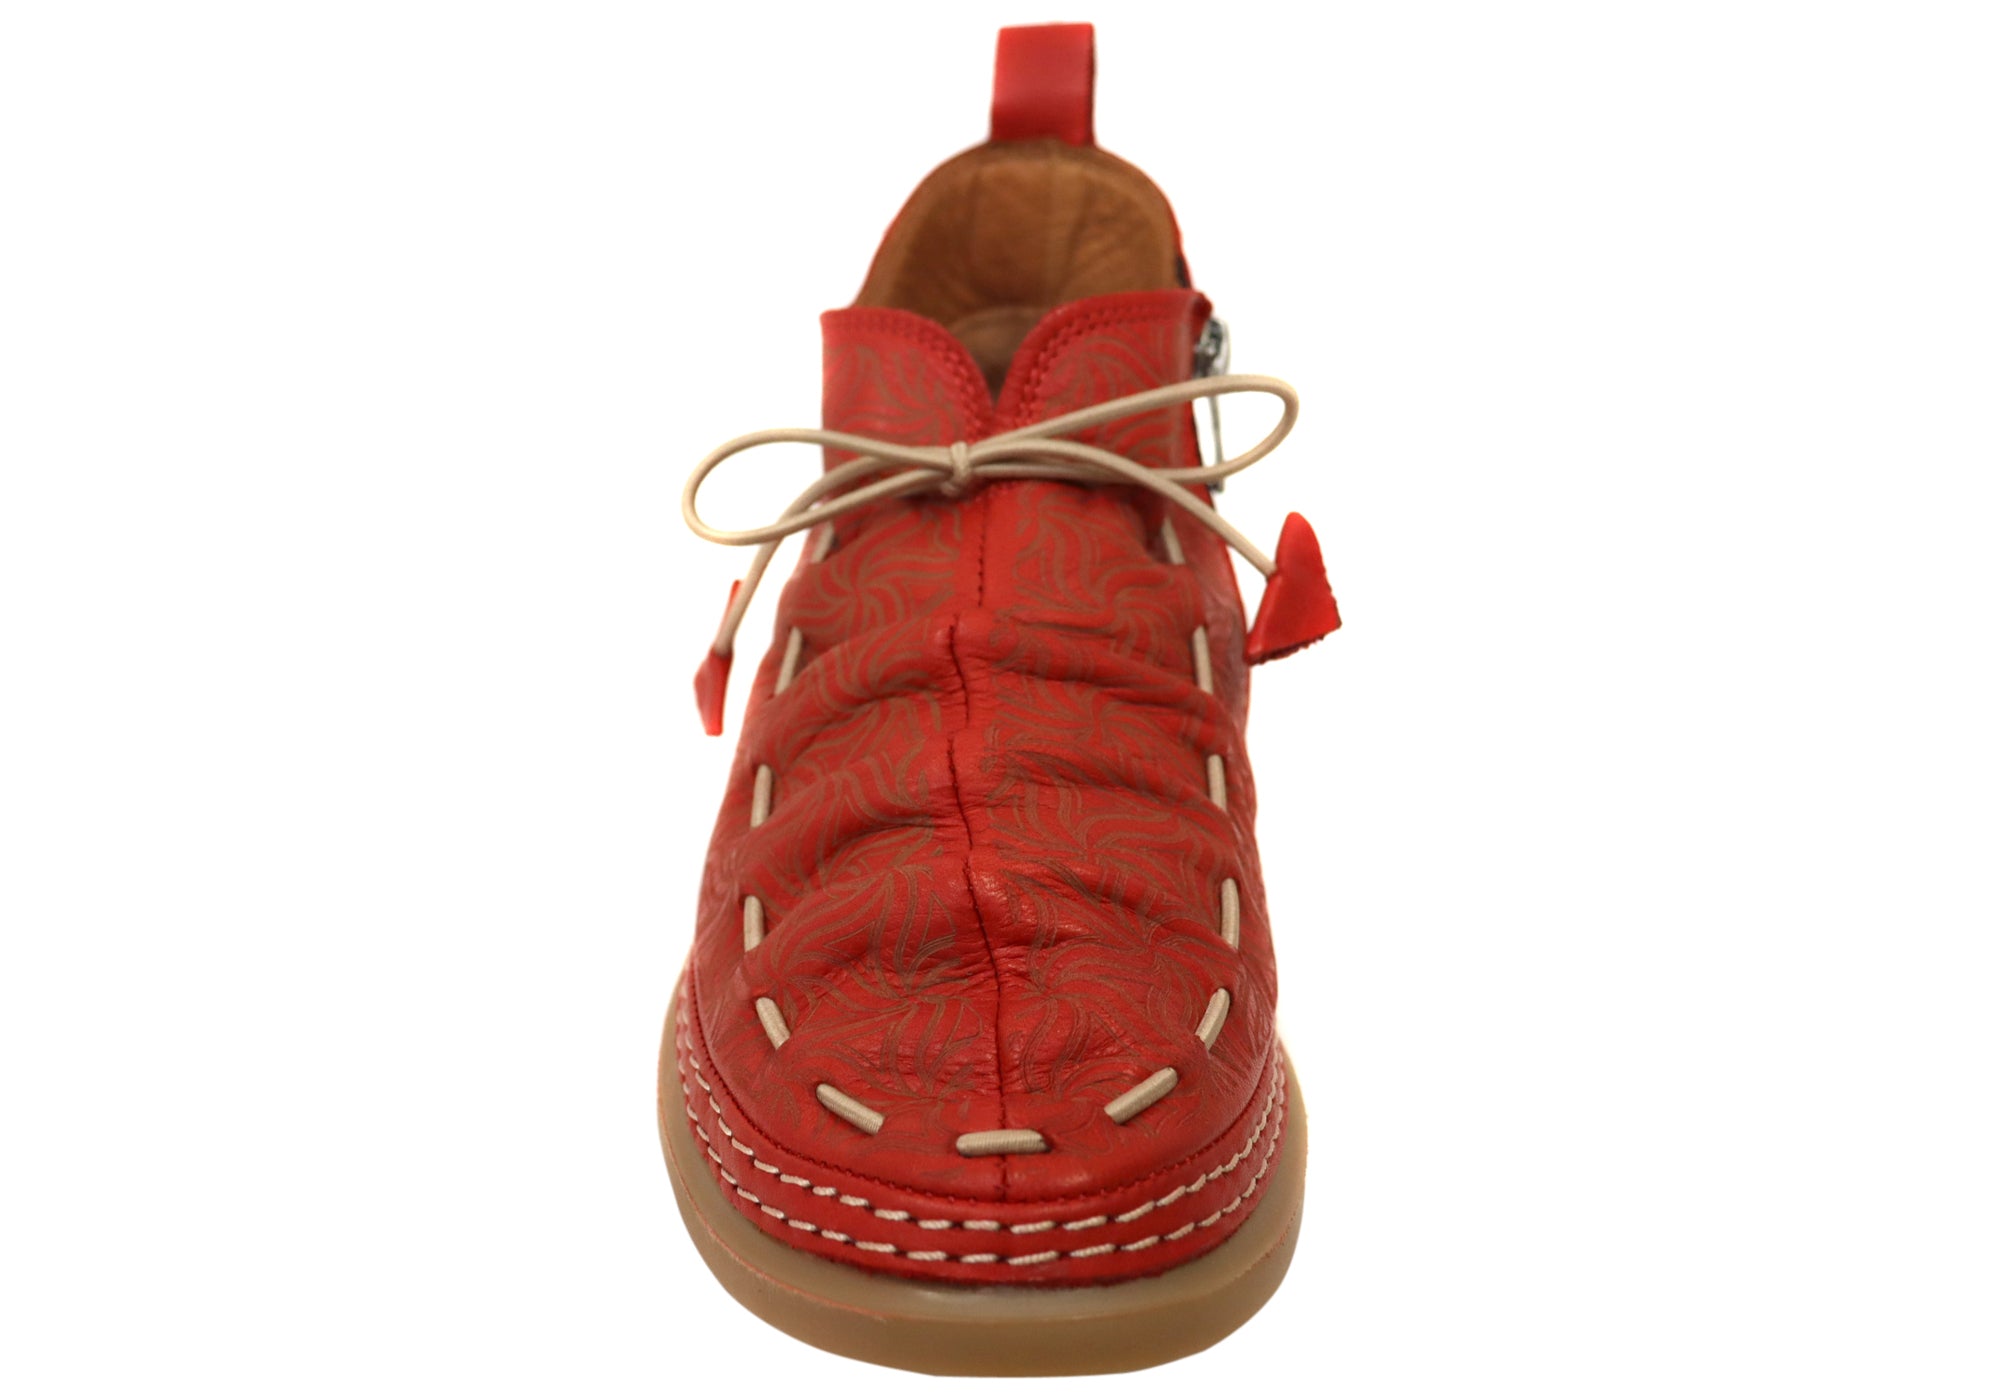 Orizonte Solira Womens European Comfortable Leather Ankle Boots